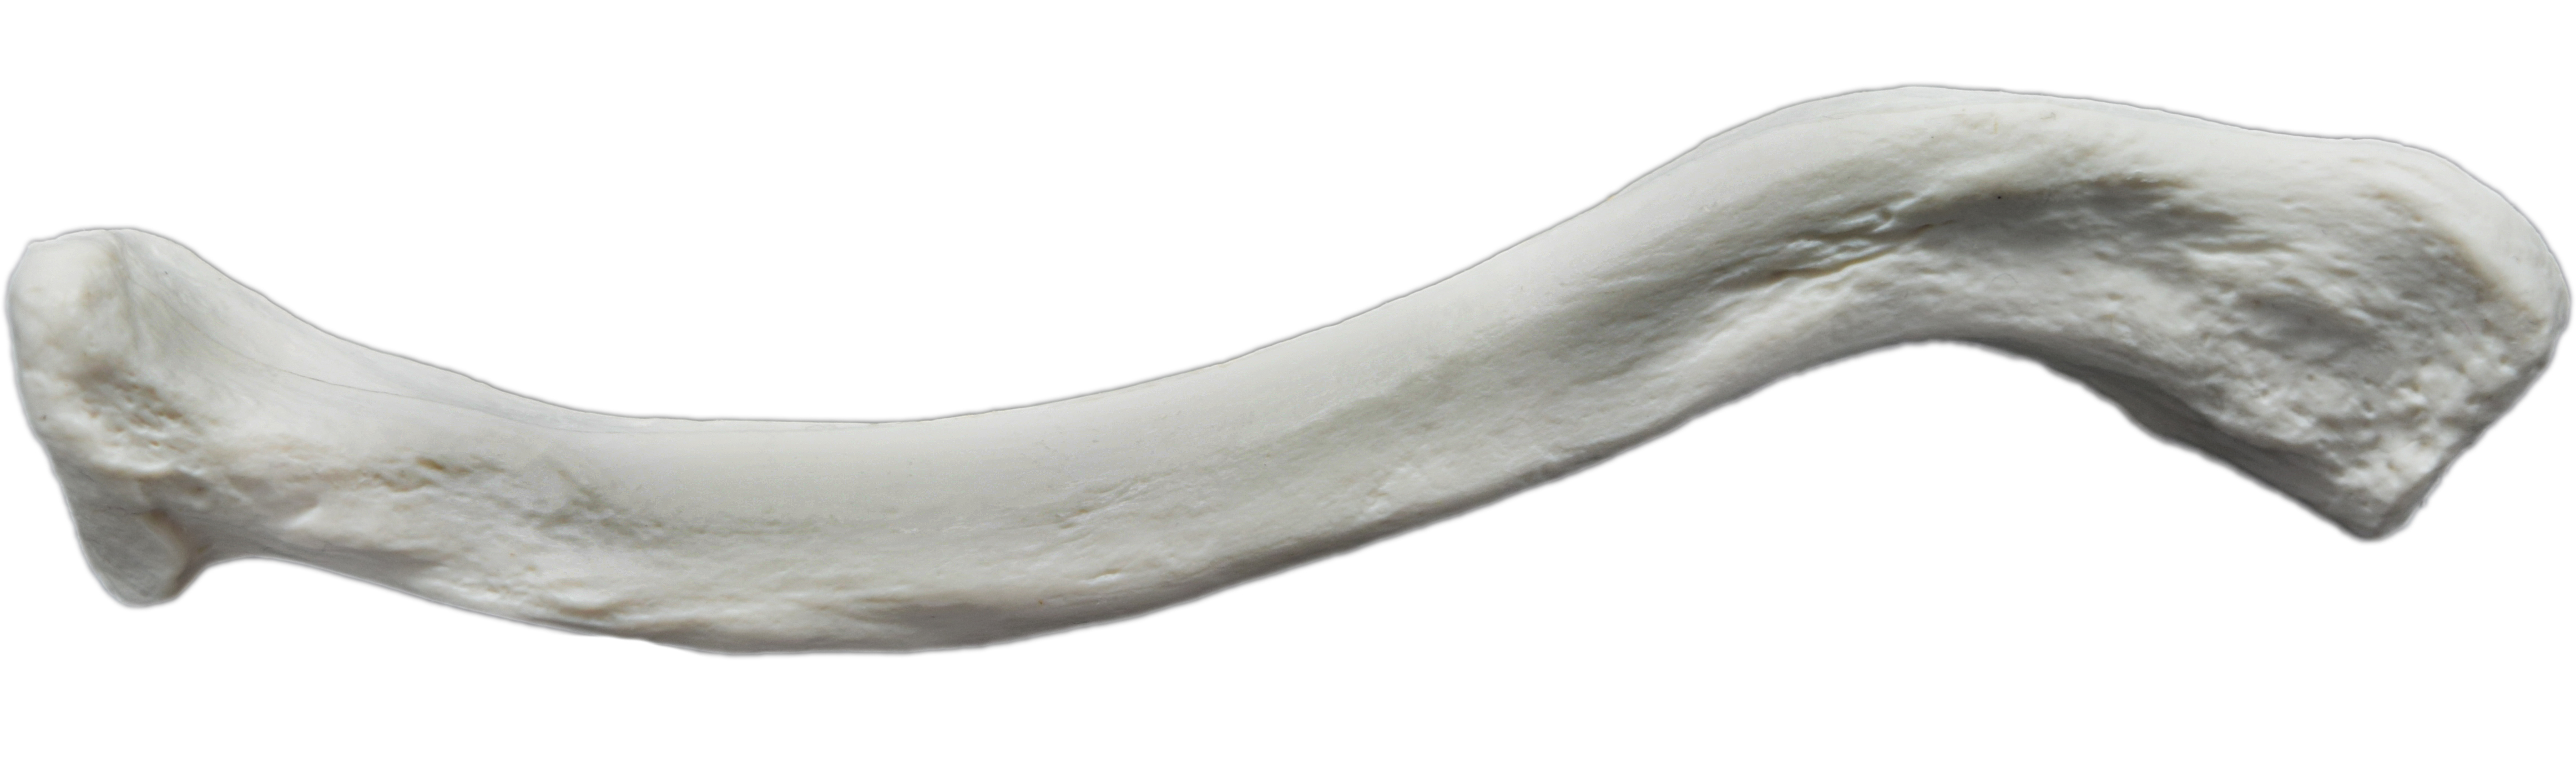 Clavicle Bone - R - Anatomically Accurate, Detailed Human Bone Replica - hBARSCI | eBay